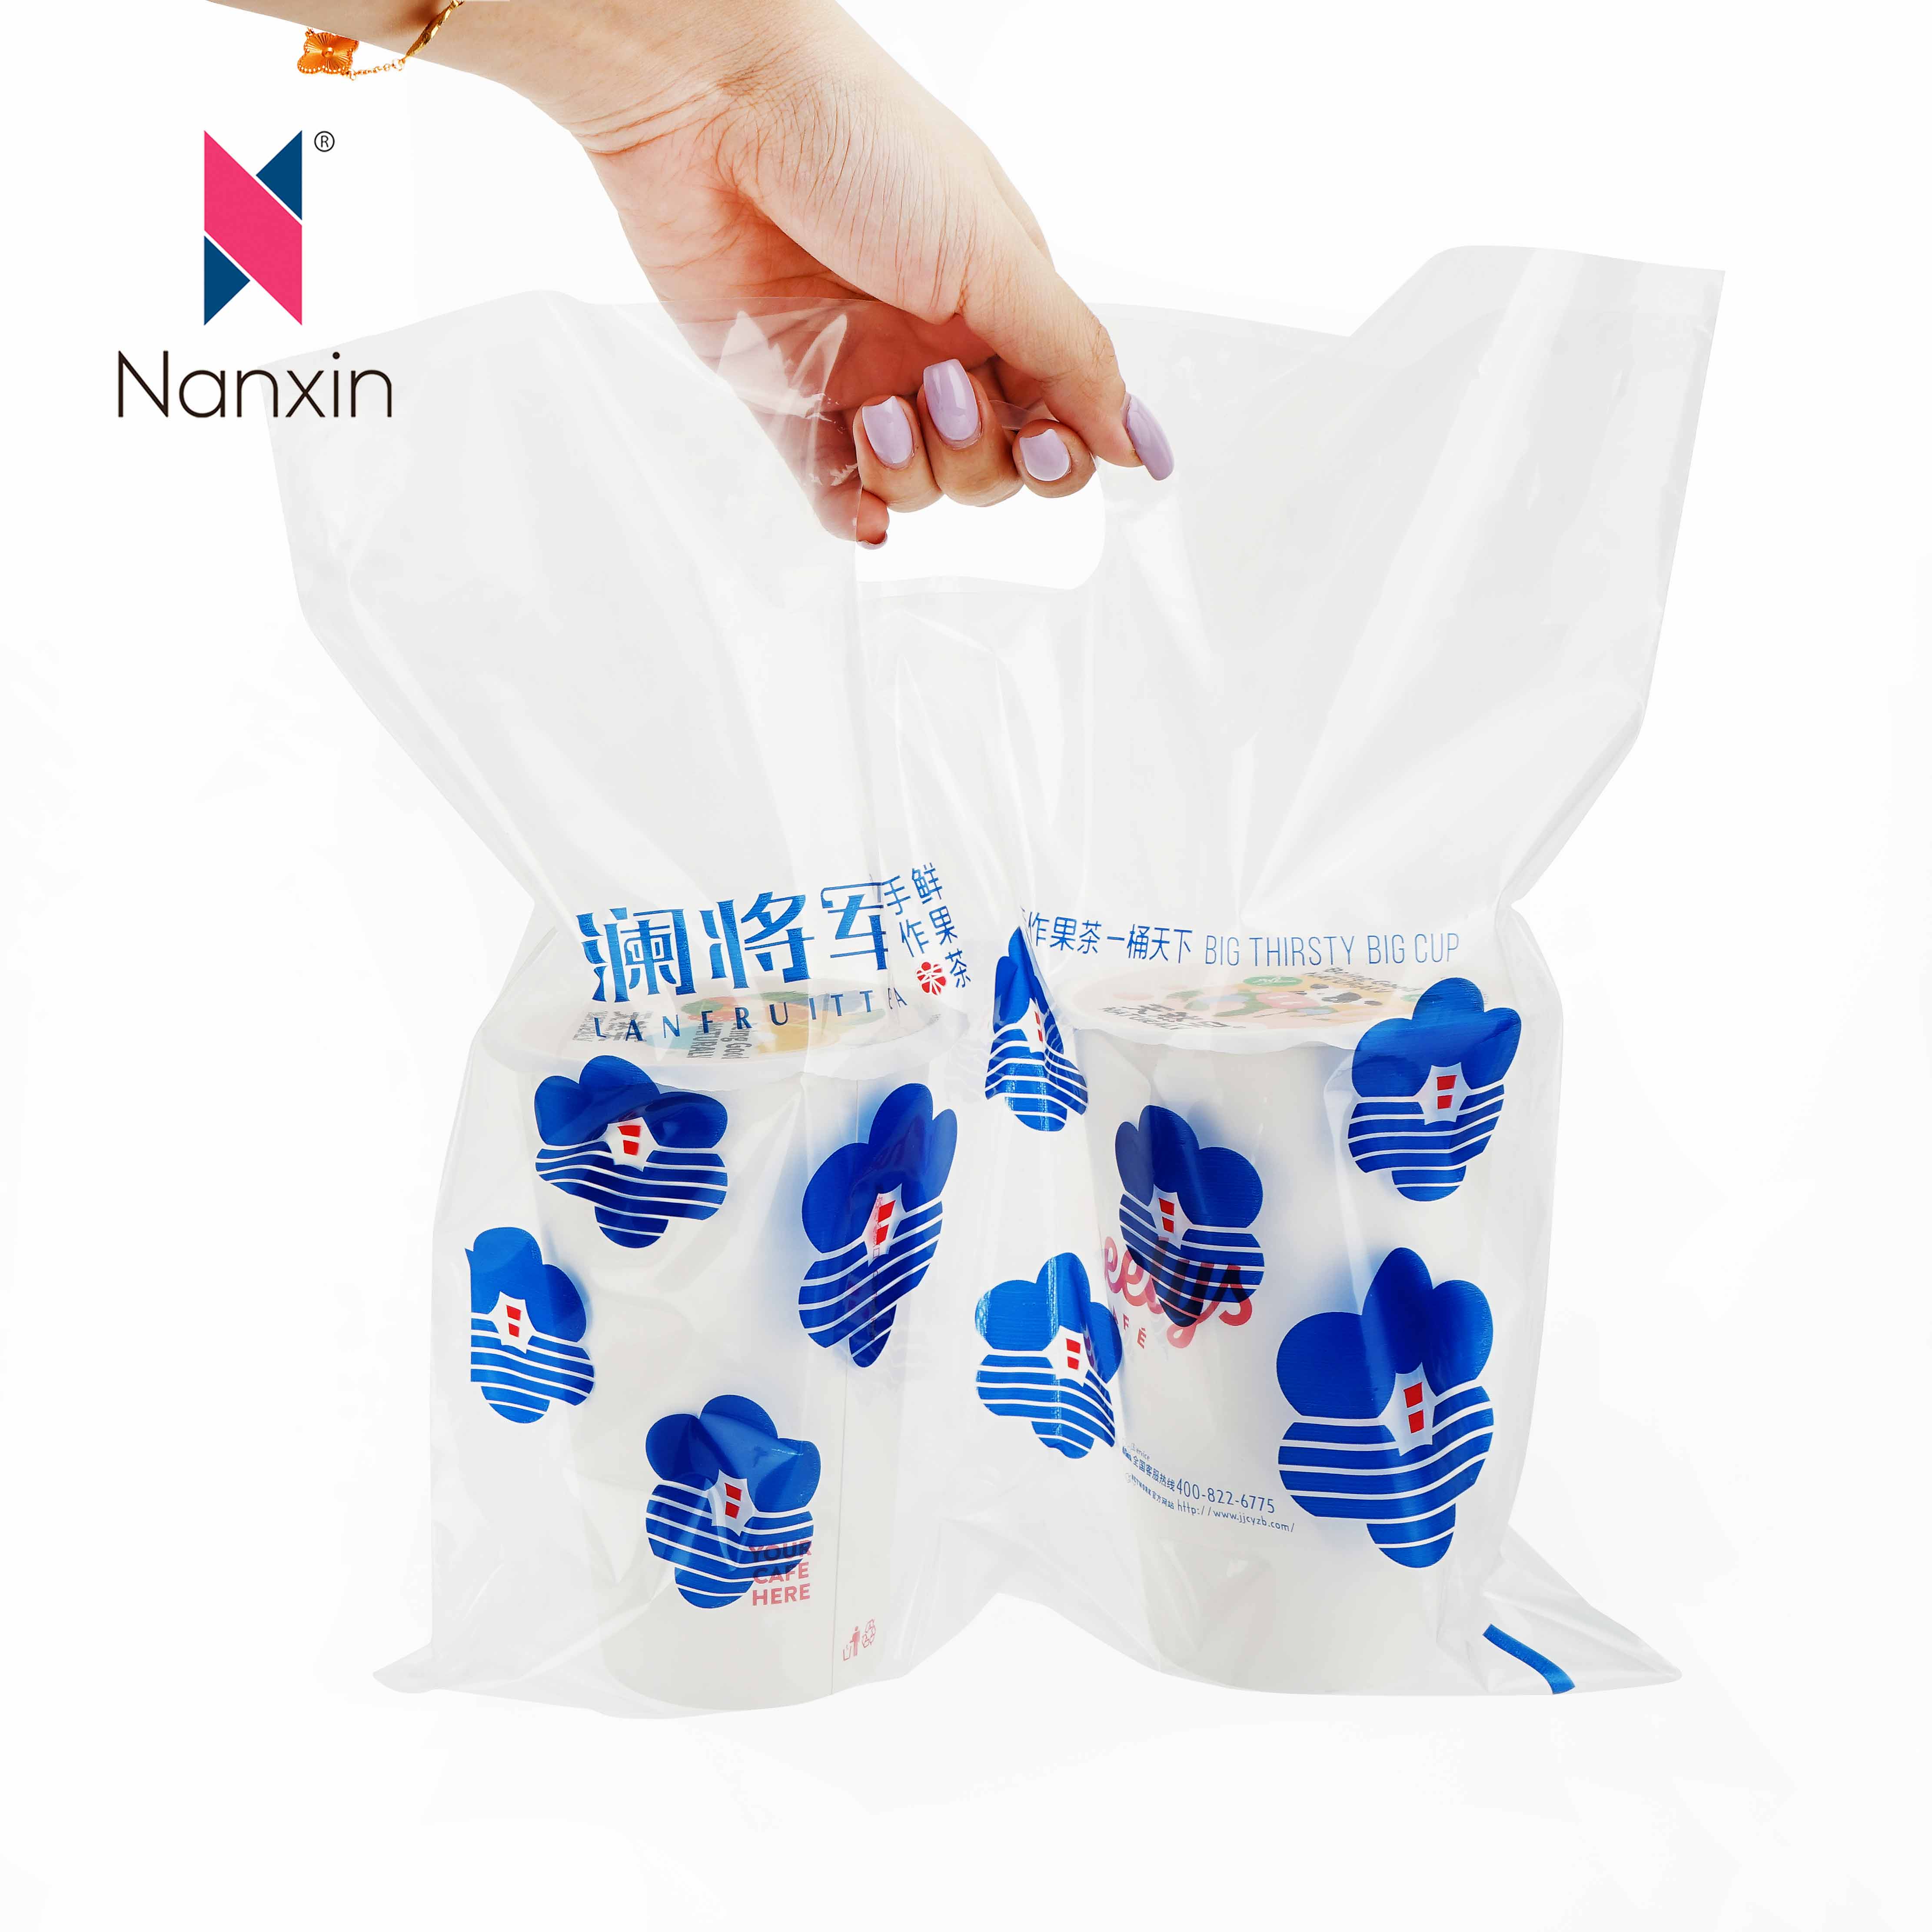 Tin-aw nga Takeaway Food Plastic Carrier Transparent Coffee Milk Tea Cup Holder Bags